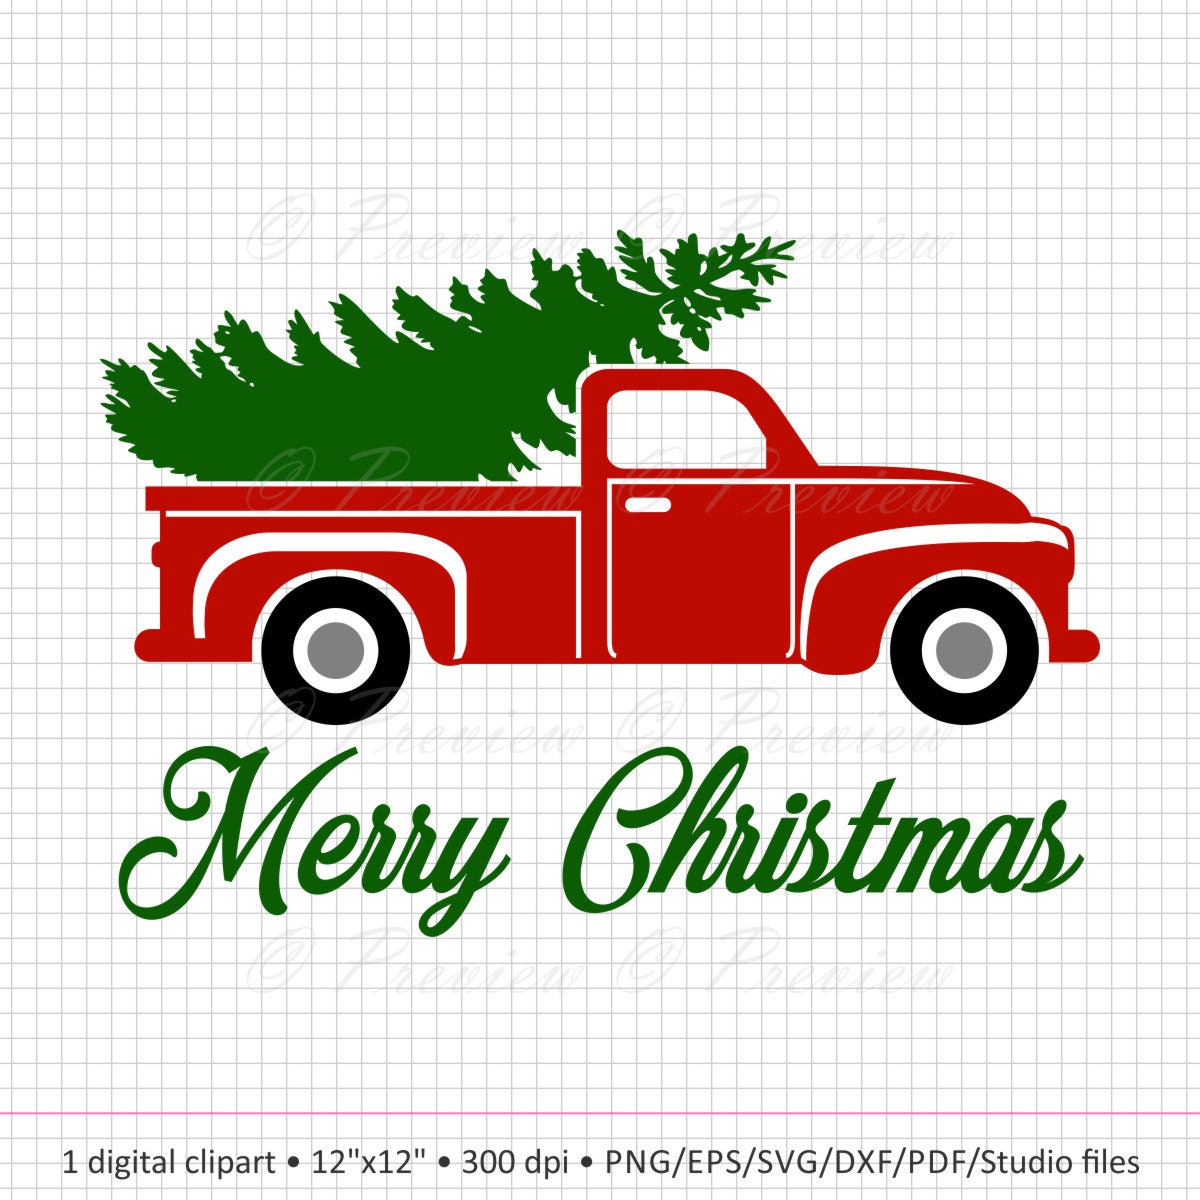 Buy 2 Get 1 Free Digital Clipart Christmas Tree Truck